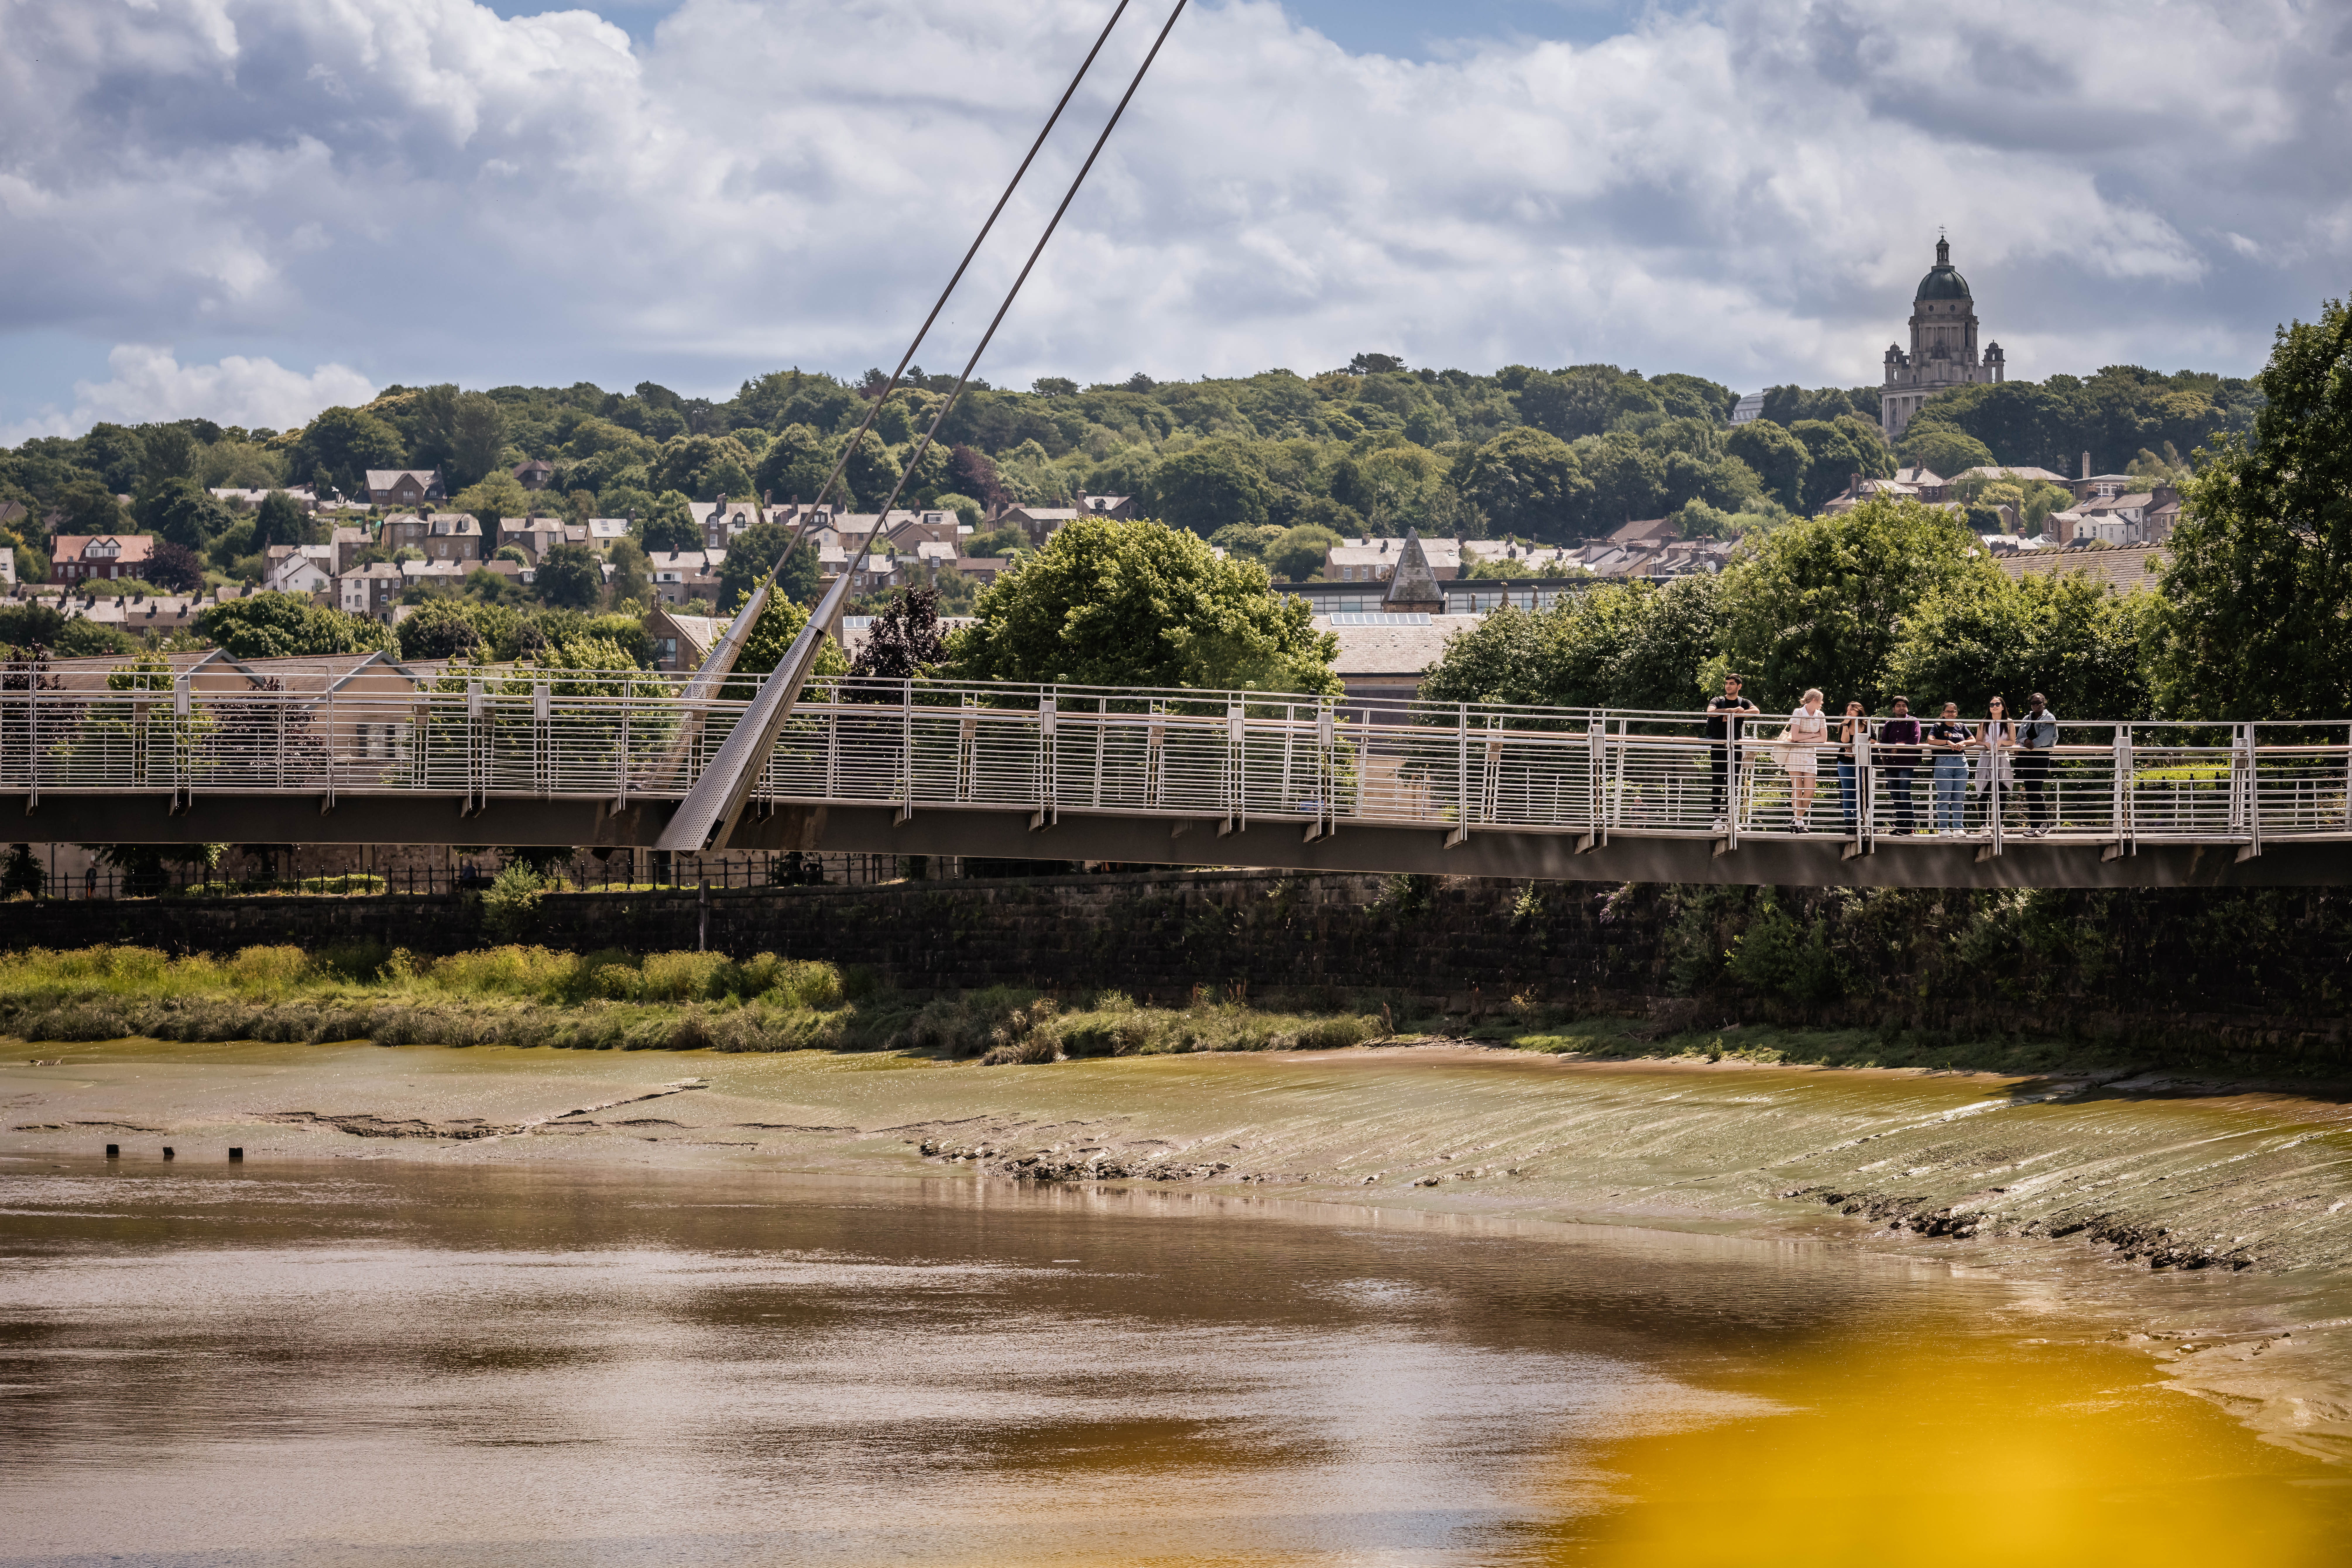 Students walking on the millennium bridge, Lancaster. 